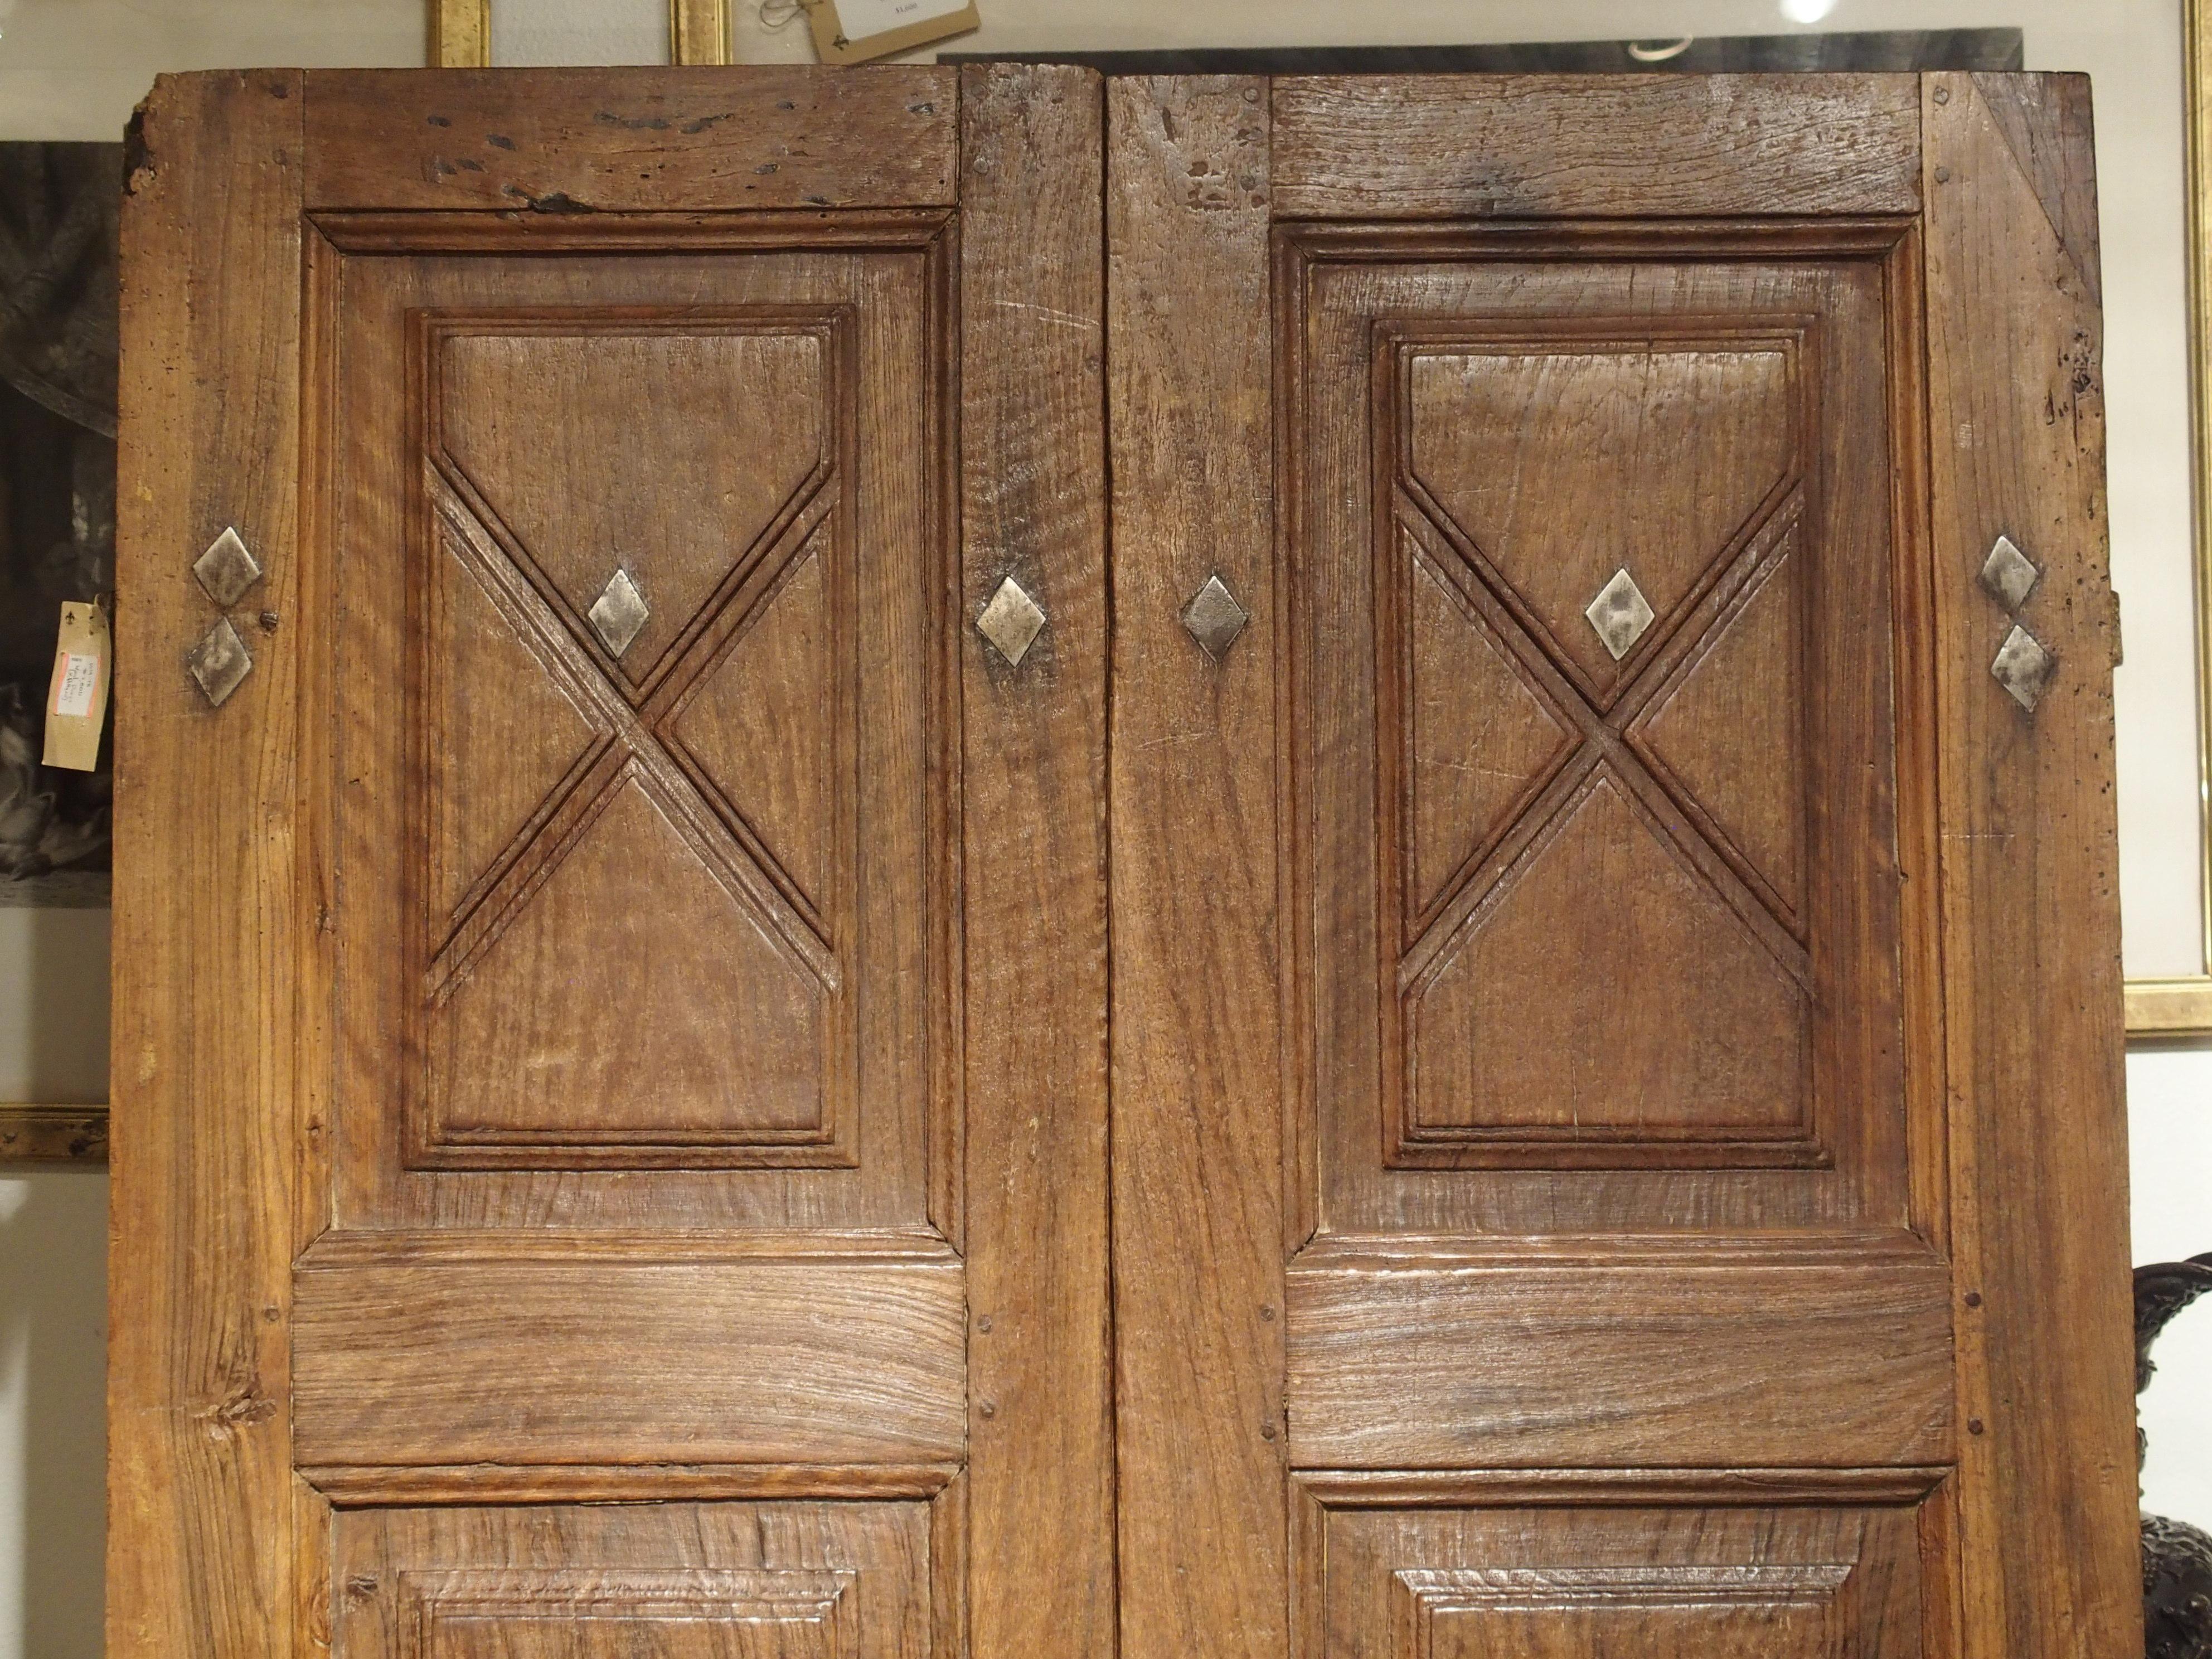 Iron Pair of circa 1700 Doors from the Piedmont Region of Italy